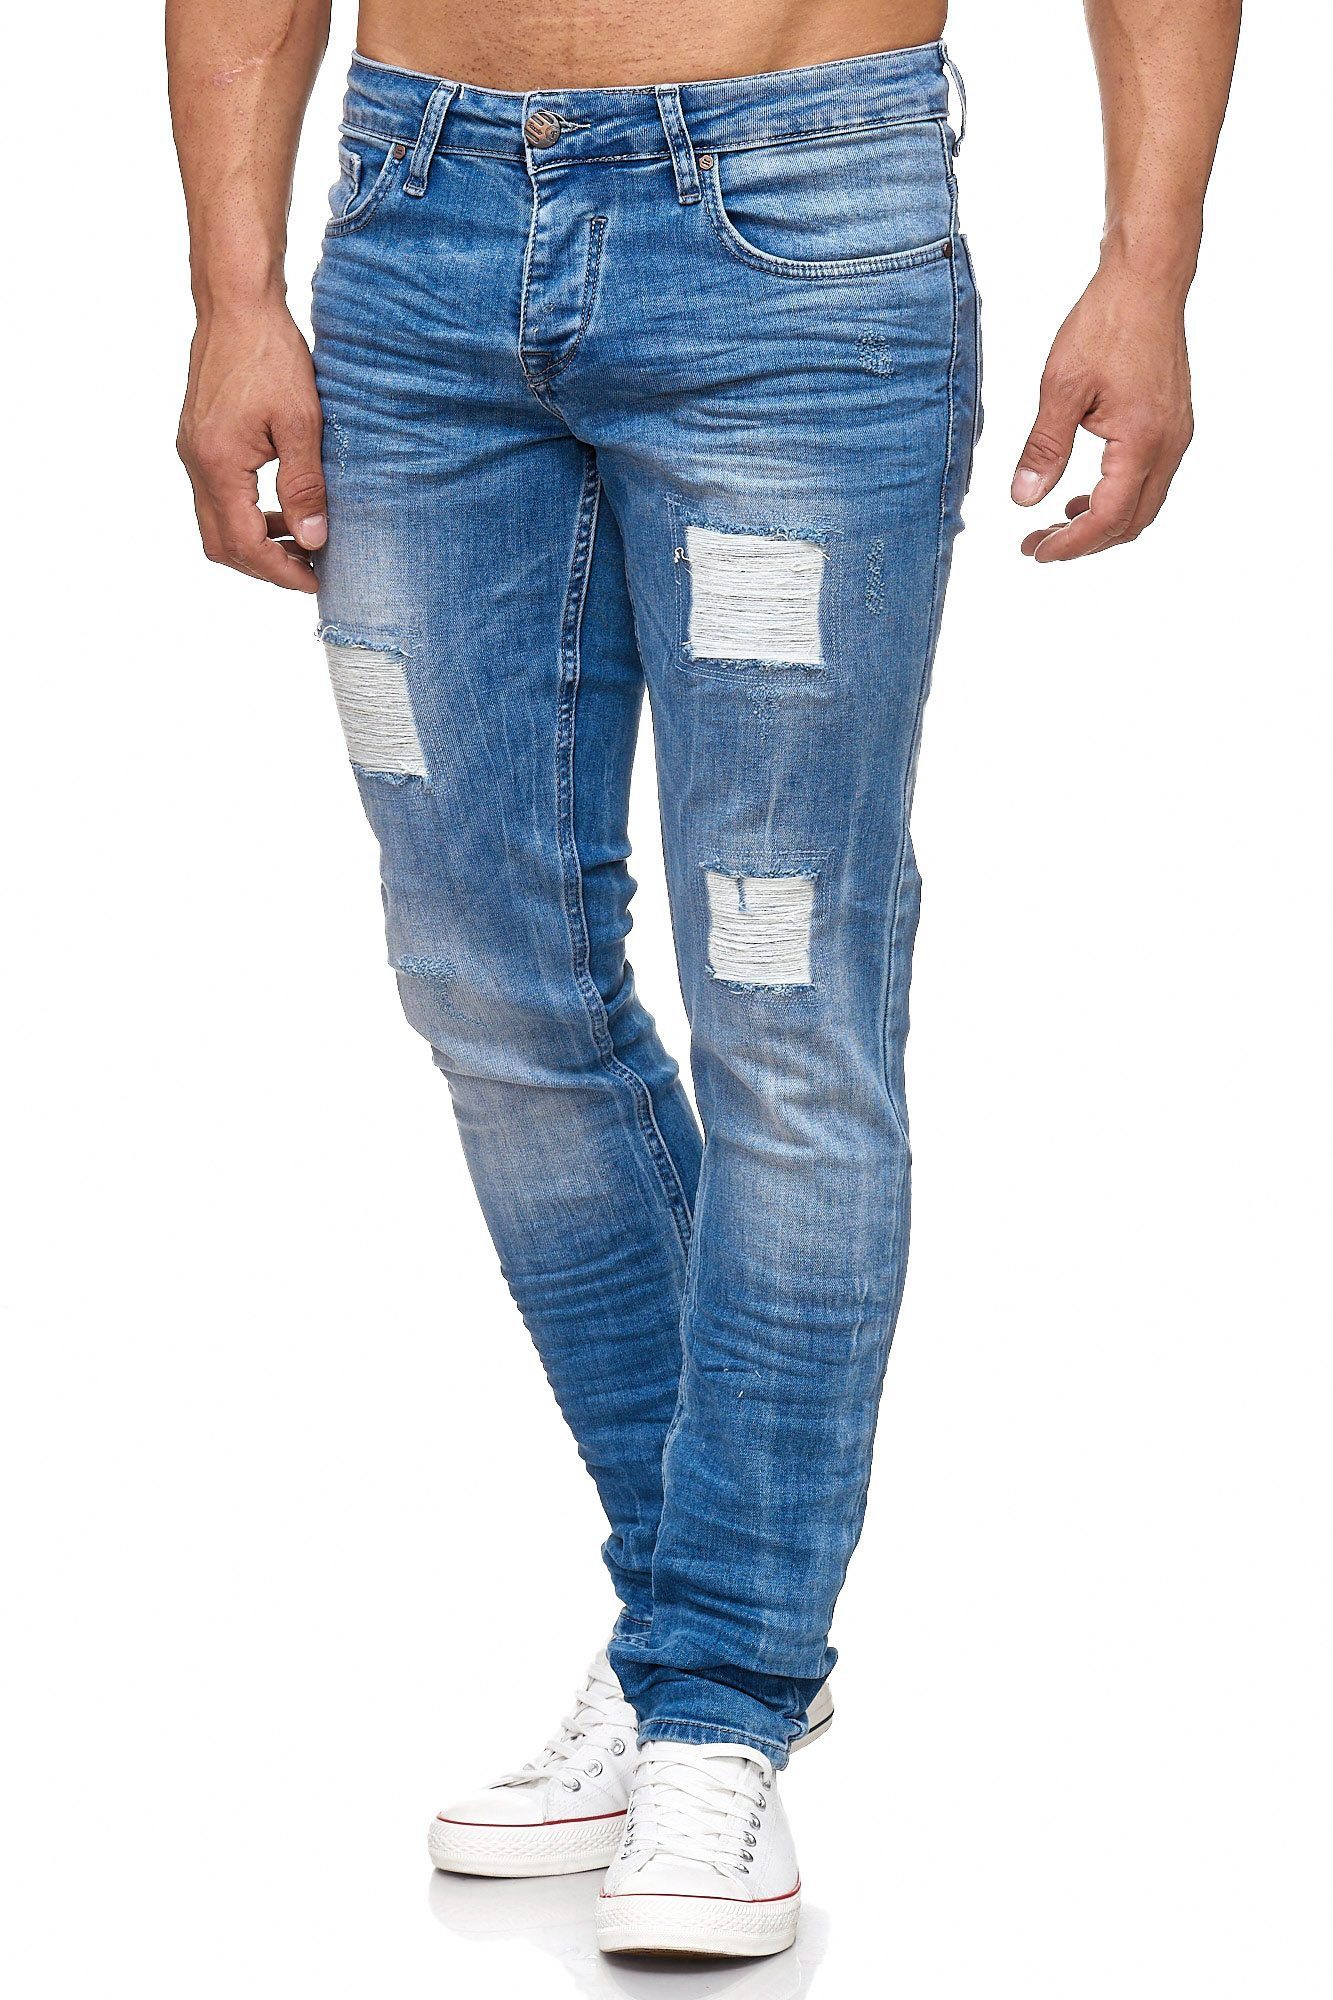 Tazzio Straight-Jeans 17505 im Destroyed-Look blau